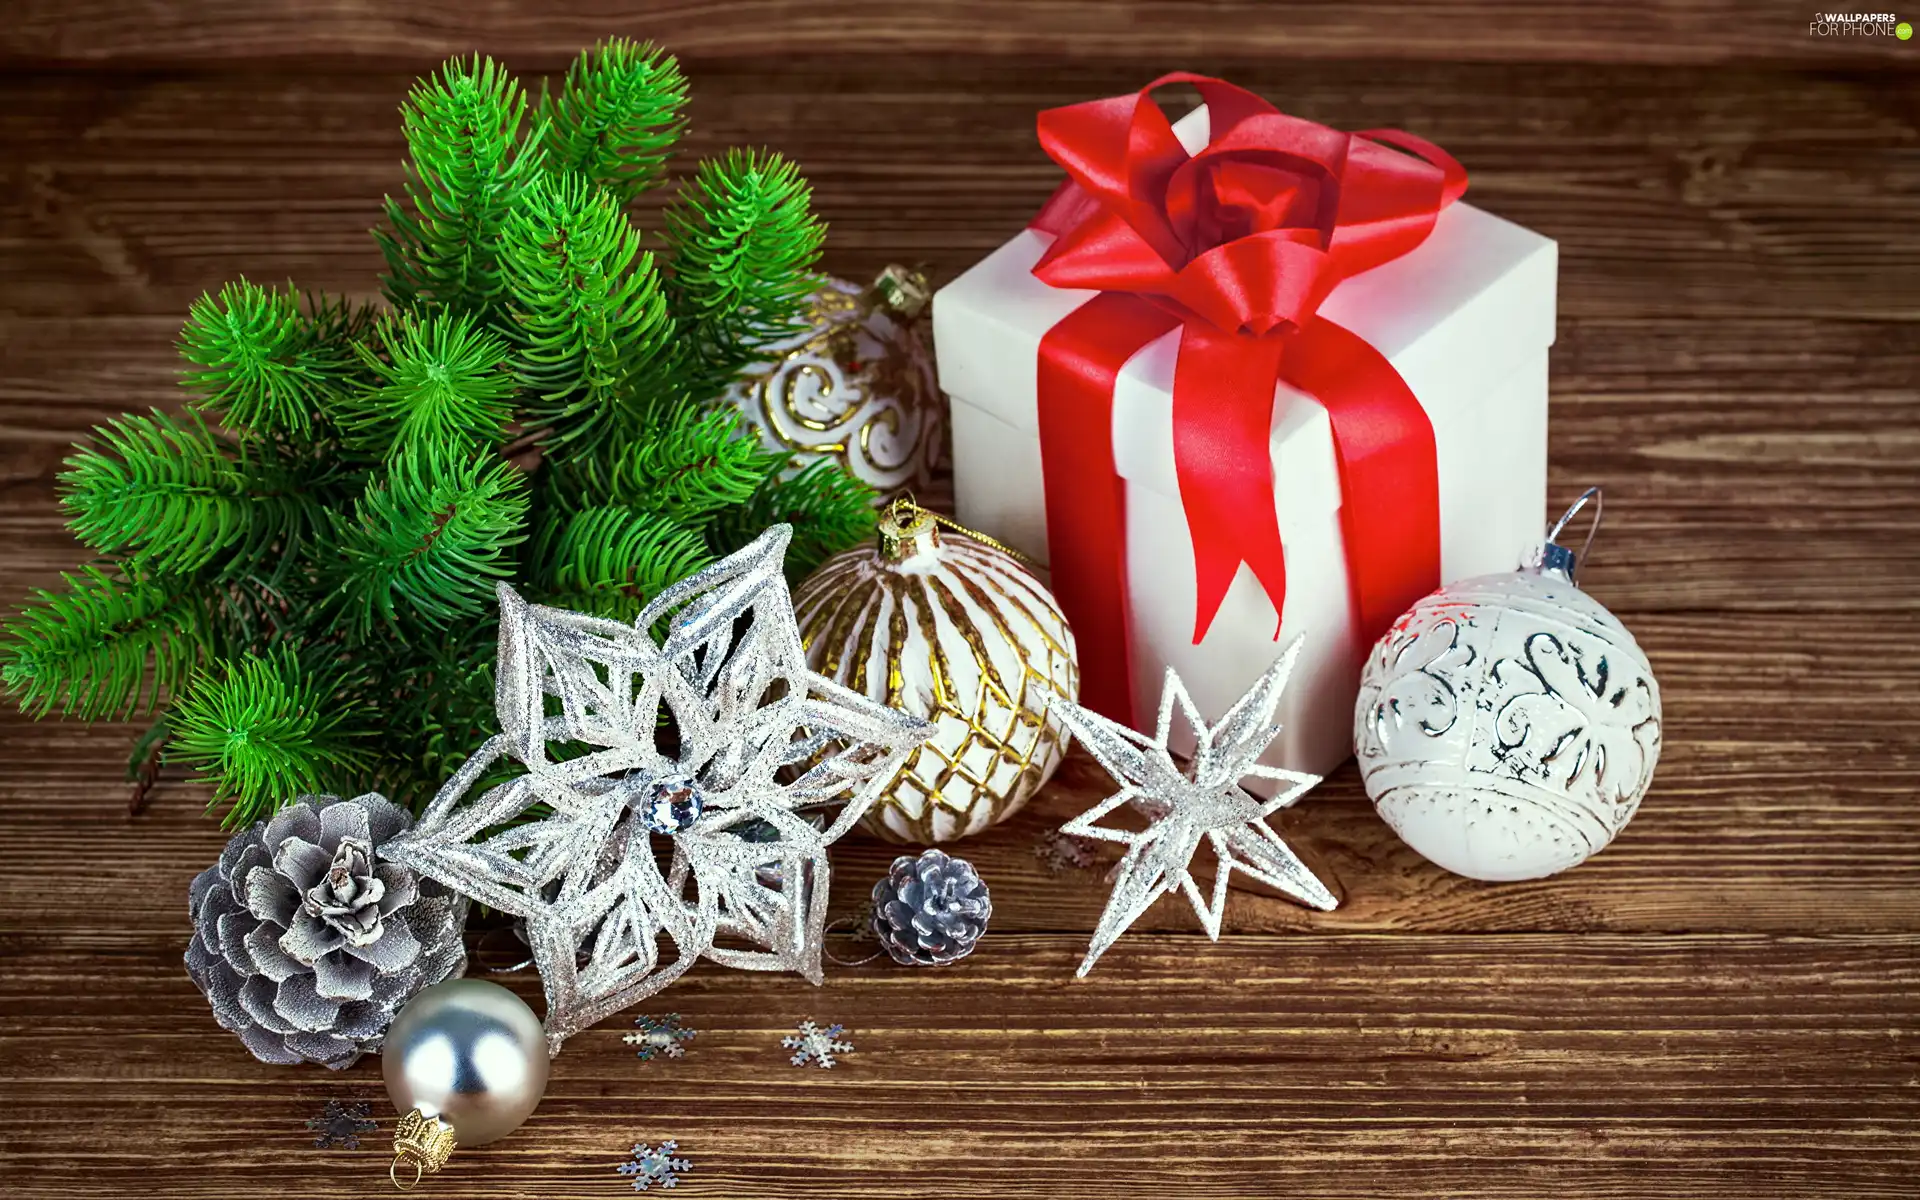 decoration, baubles, Present, Christmas